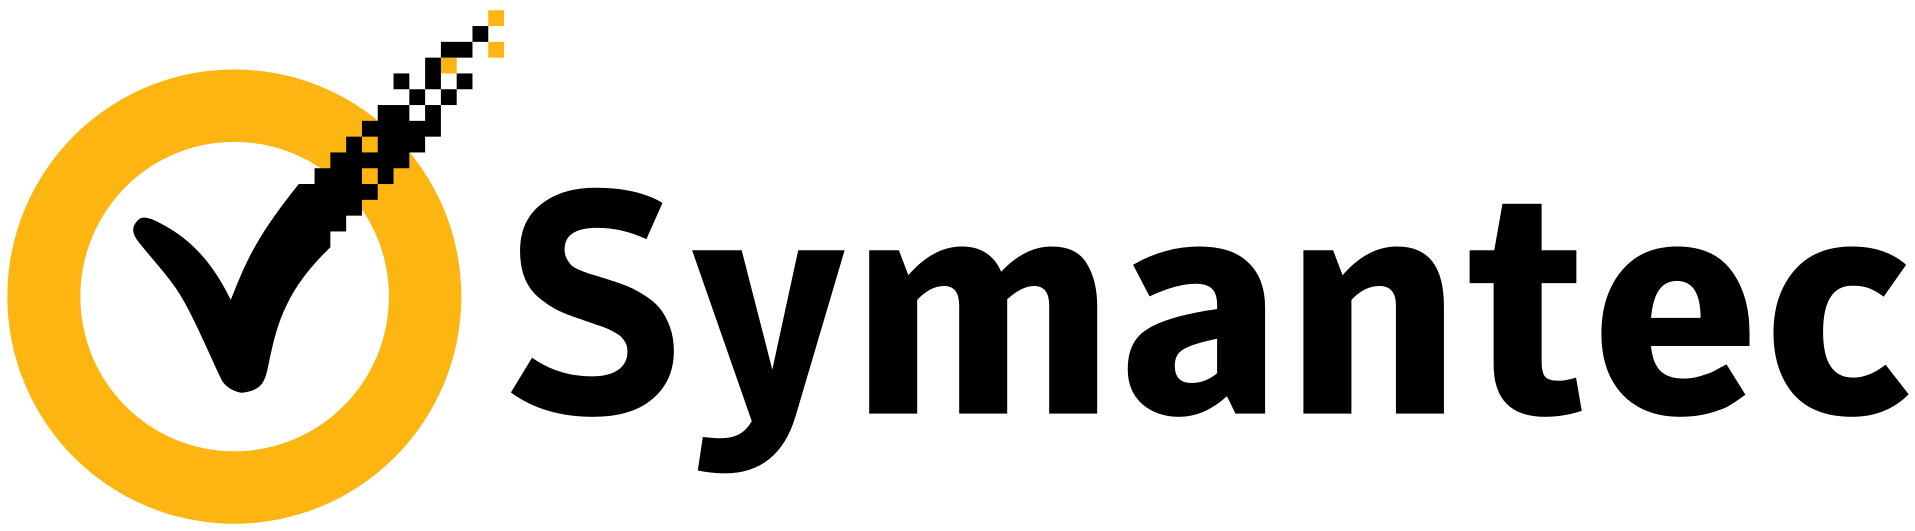 SYMANTEC SYMC ExSP-A MAIL SECURITY FOR MS EXCHANGE ANTIVIRUS 6.5 WIN PER USER I/O SUB XSP BAND A ESSENTIAL 1 MONTH (20890020)